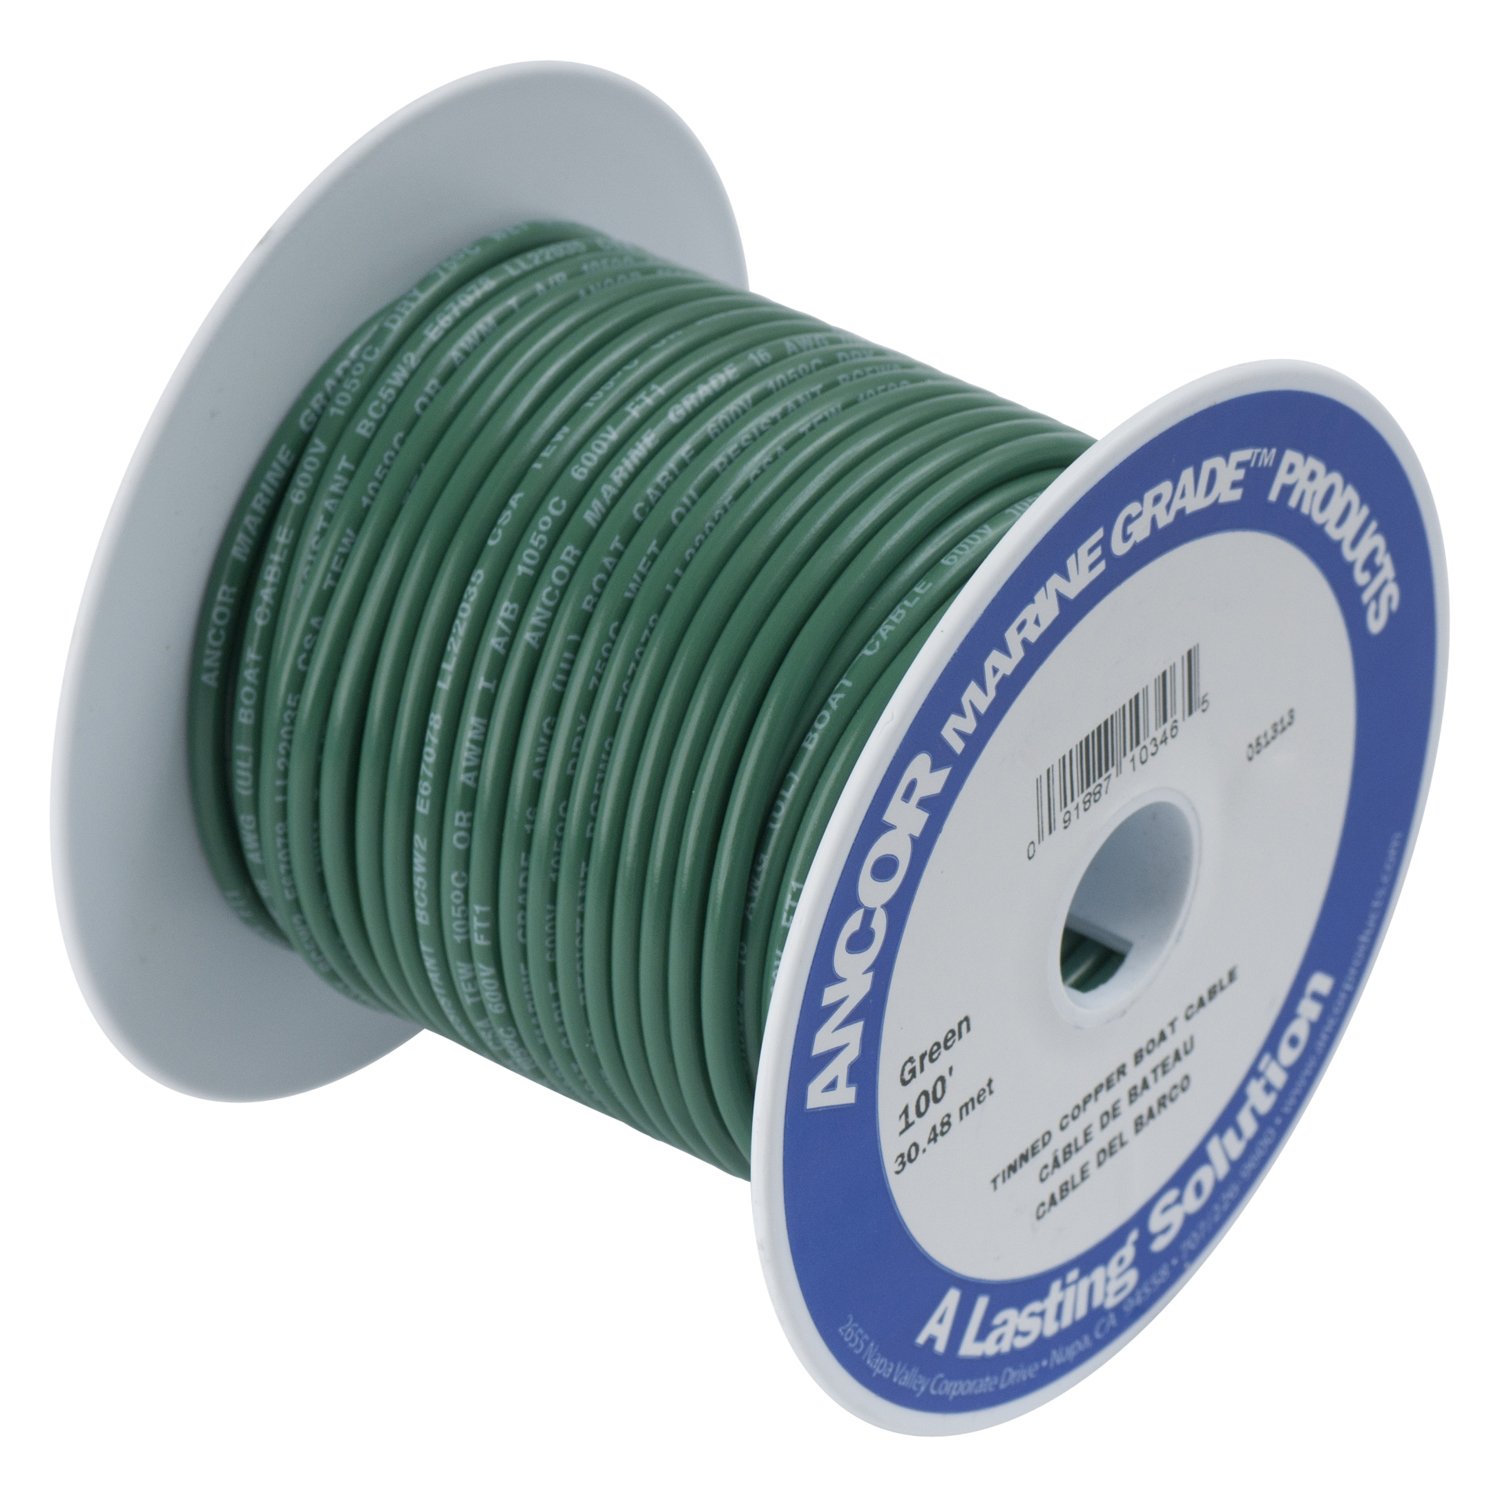 Ancor Unisex-Adult AM106310 Cable, Multicolor, Standard von Ancor